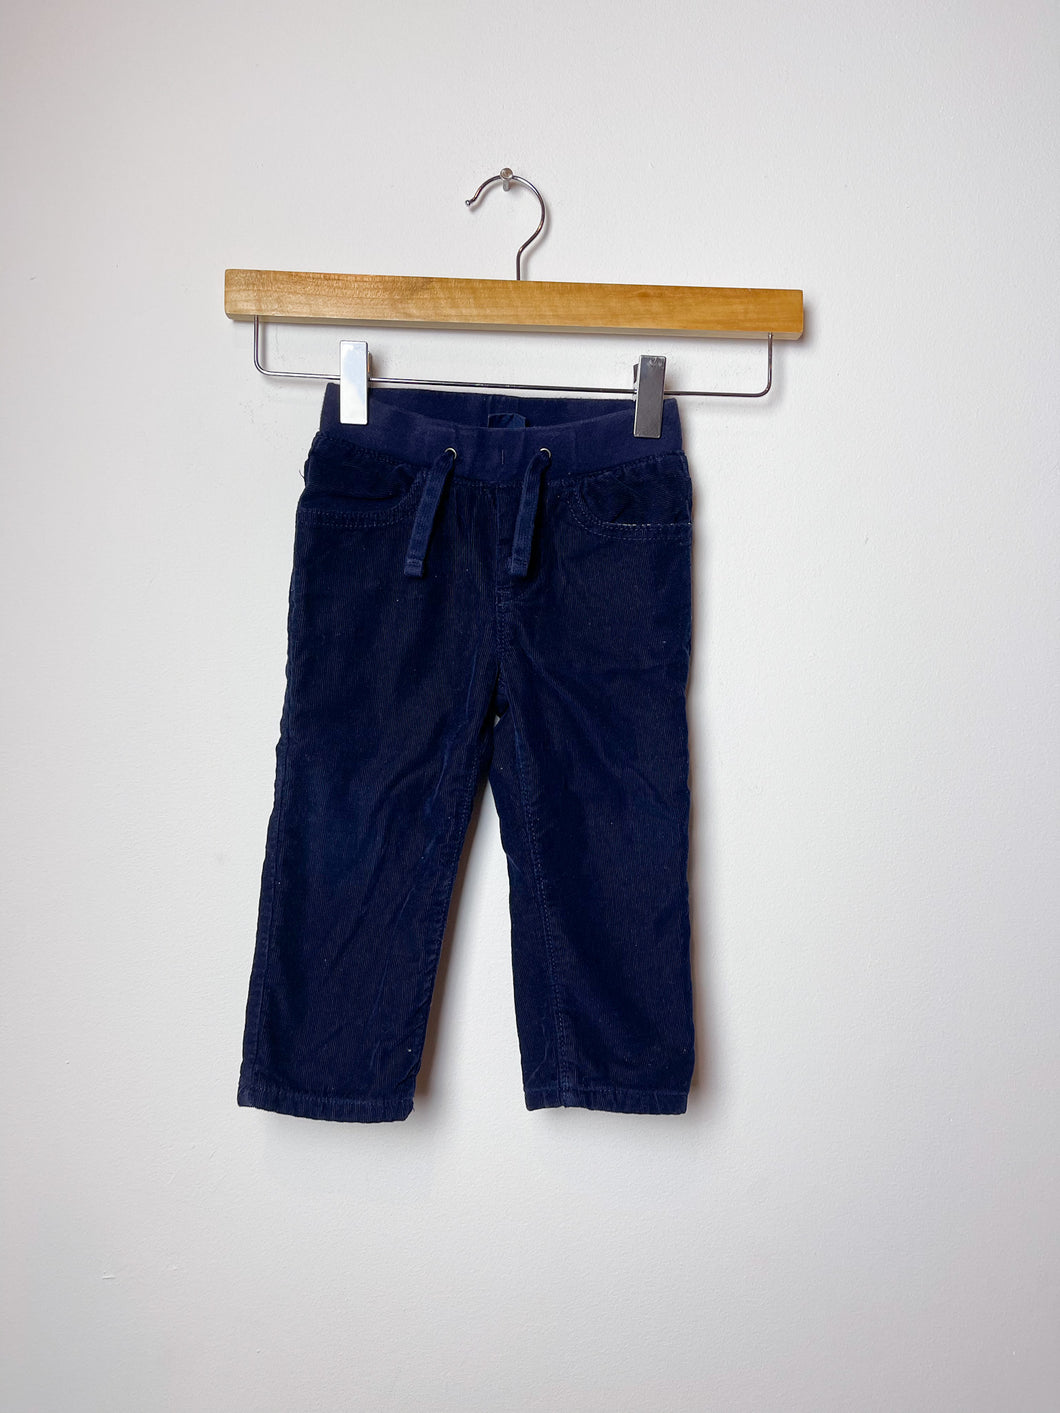 Blue Gap Corduroy Pants Size 18-24 Months